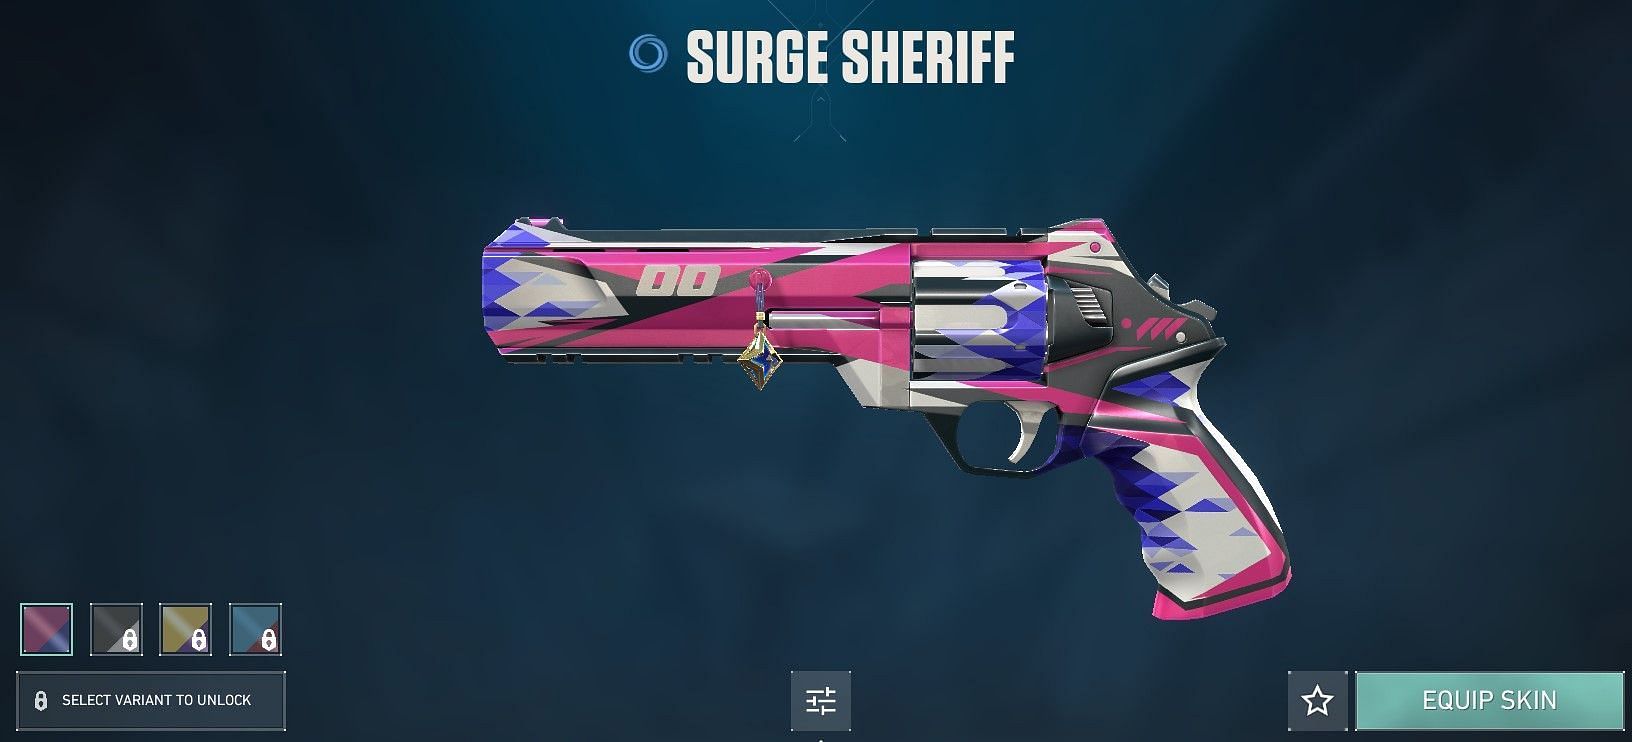 Surge Sheriff (Image via Riot Games)